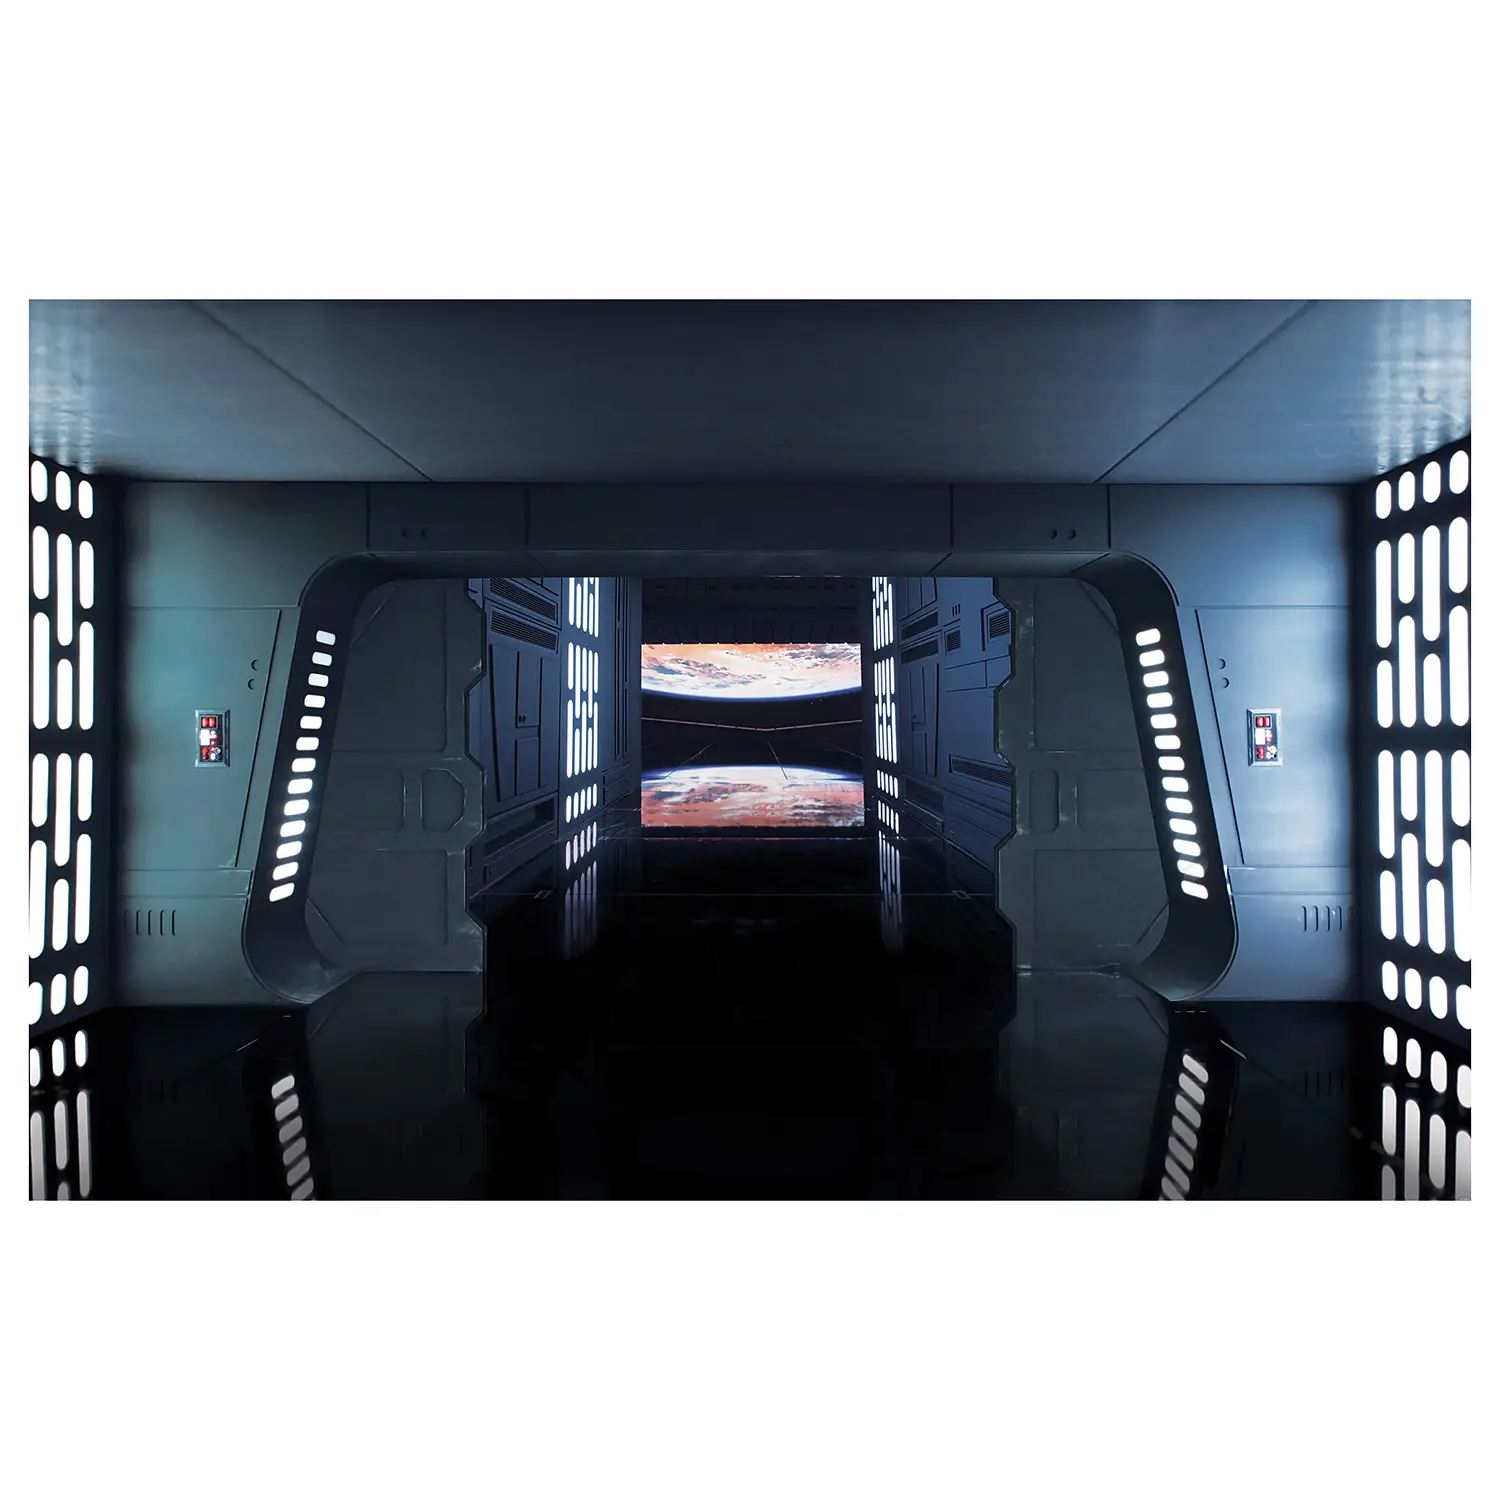 Fototapete Star Wars Floor Death Star